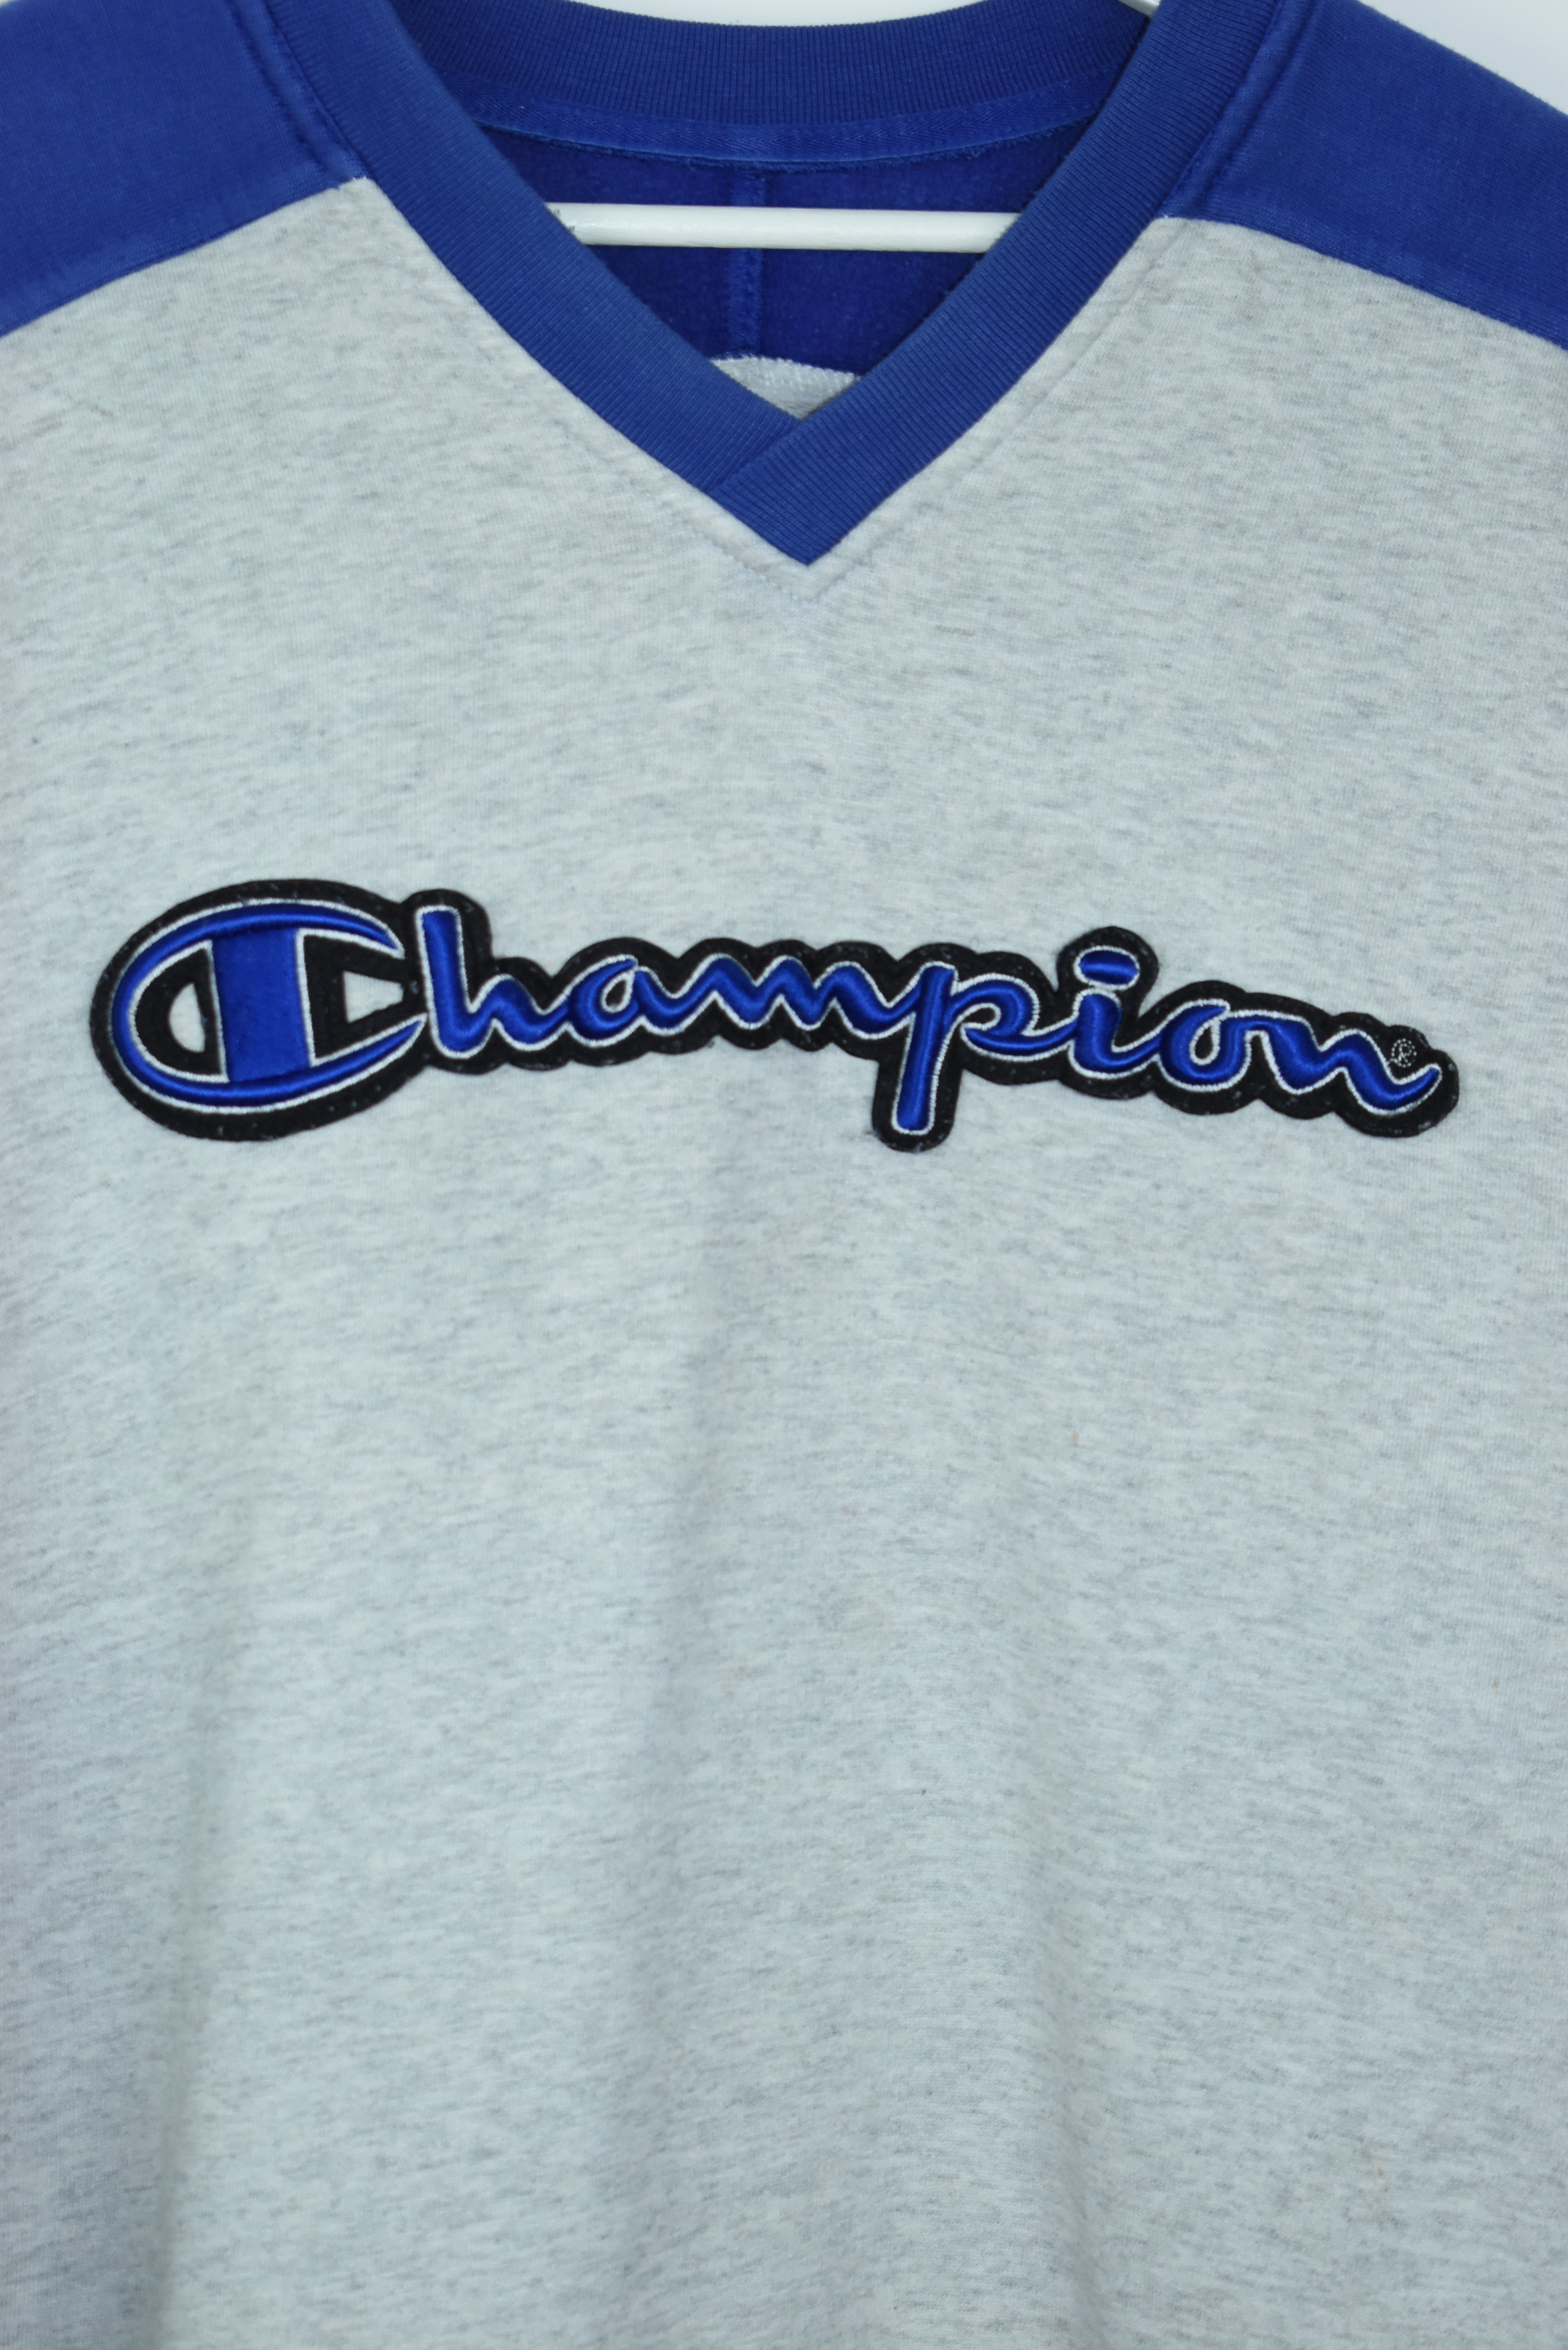 Vintage Champion Embroidery Sweatshirt Xlarge